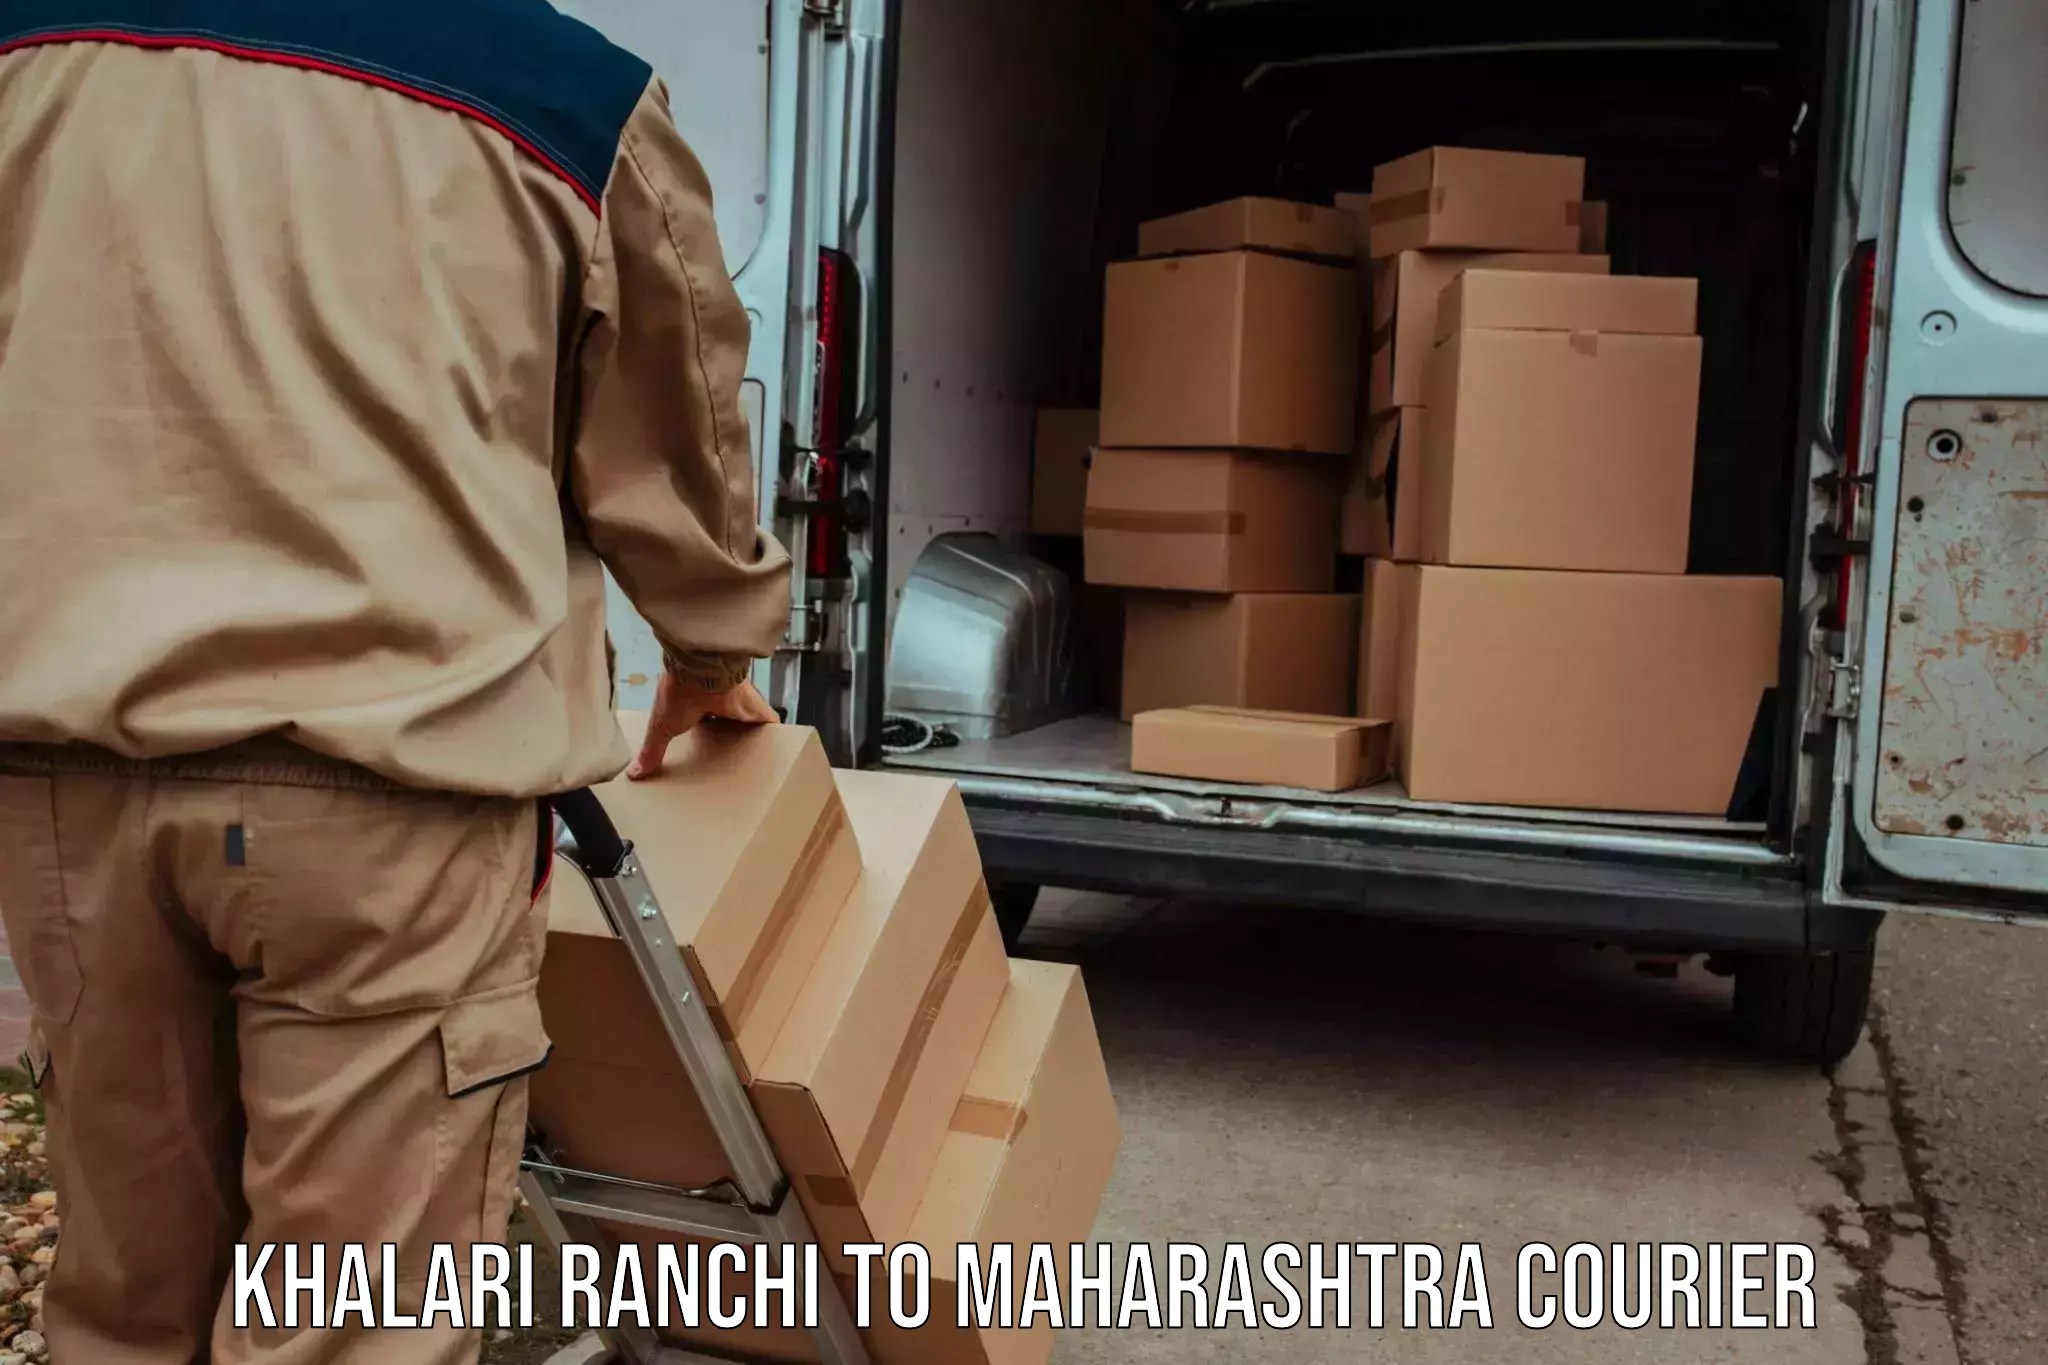 Expedited shipping methods Khalari Ranchi to IIIT Nagpur